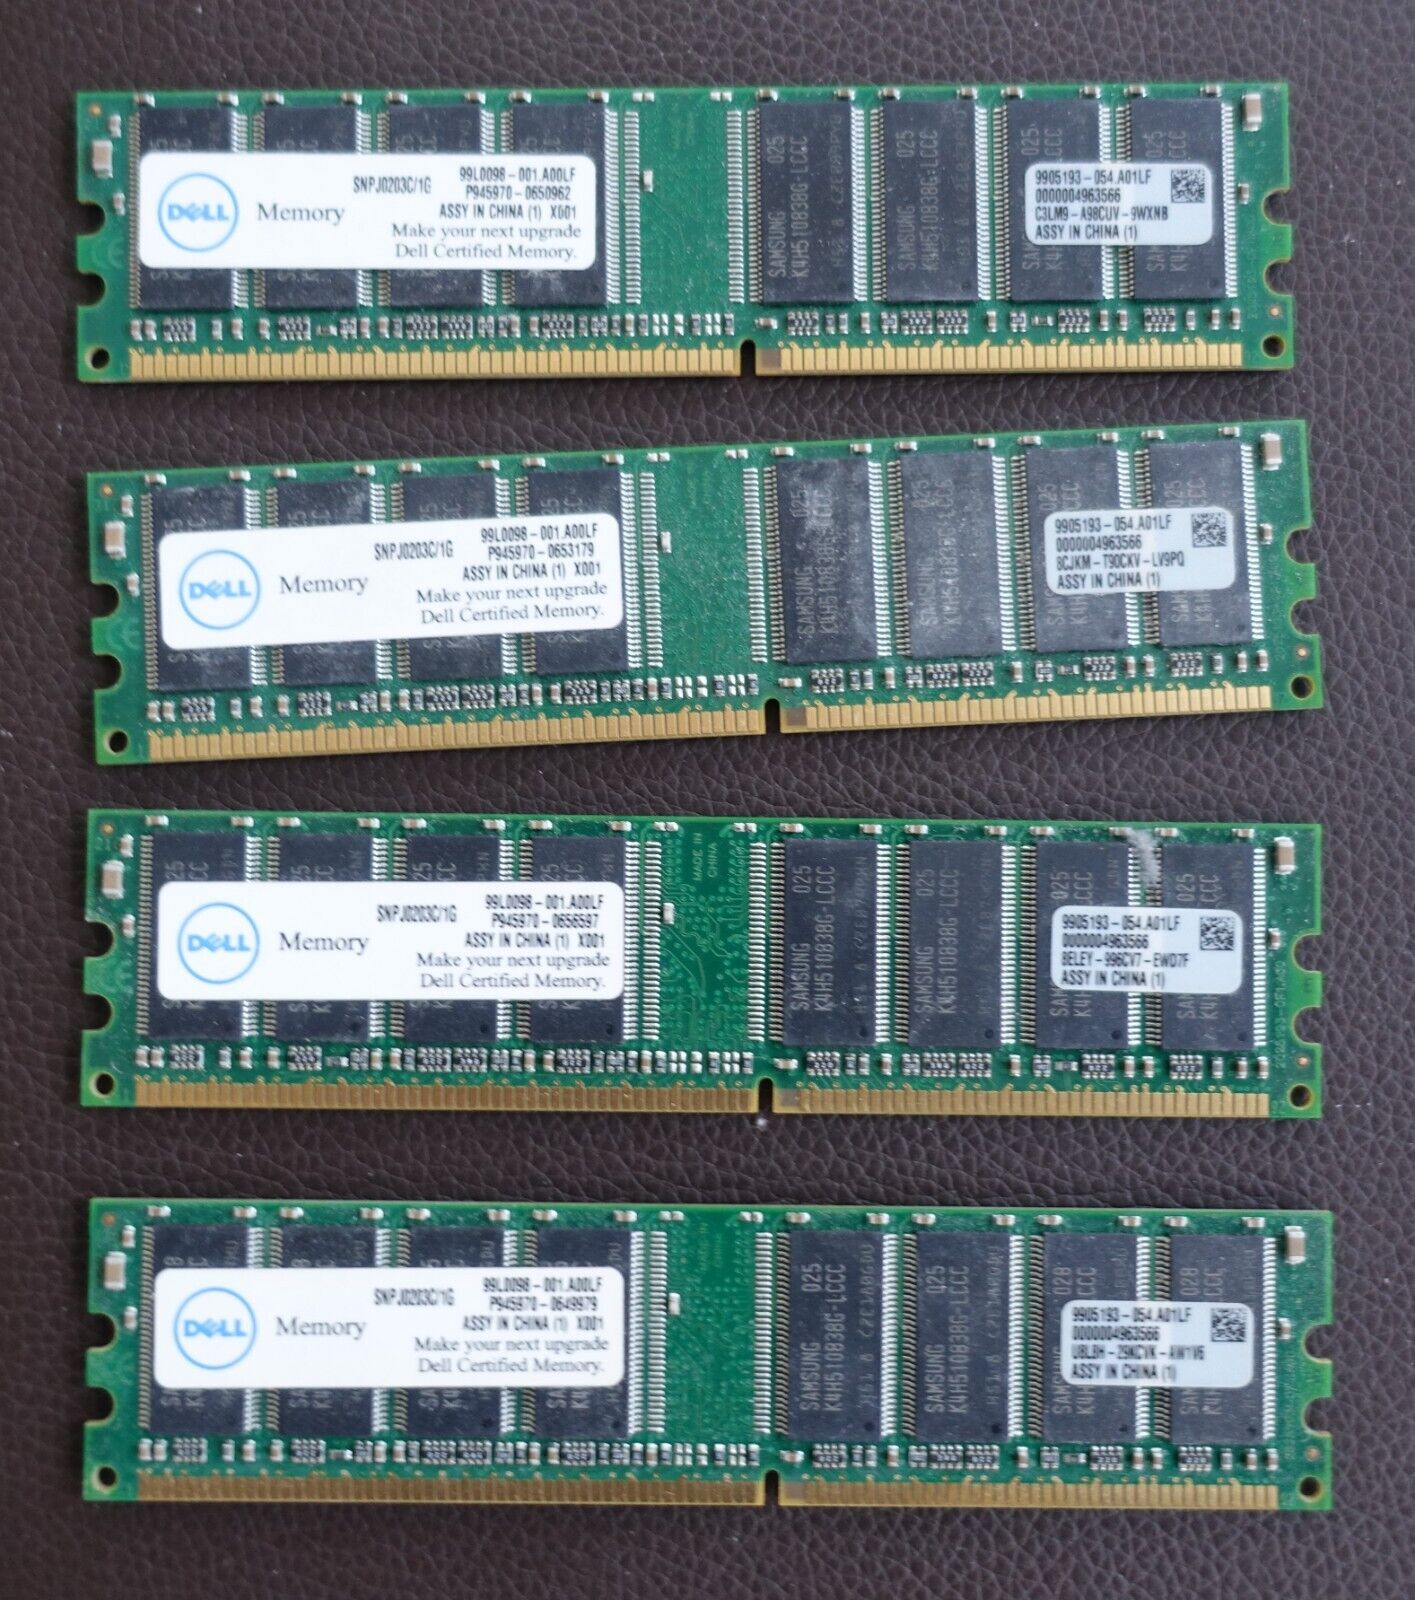 4 GB (4 x 1 GB) Dell DDR-400 PC3200 400MHz DIMM DDR SDRAM Memory